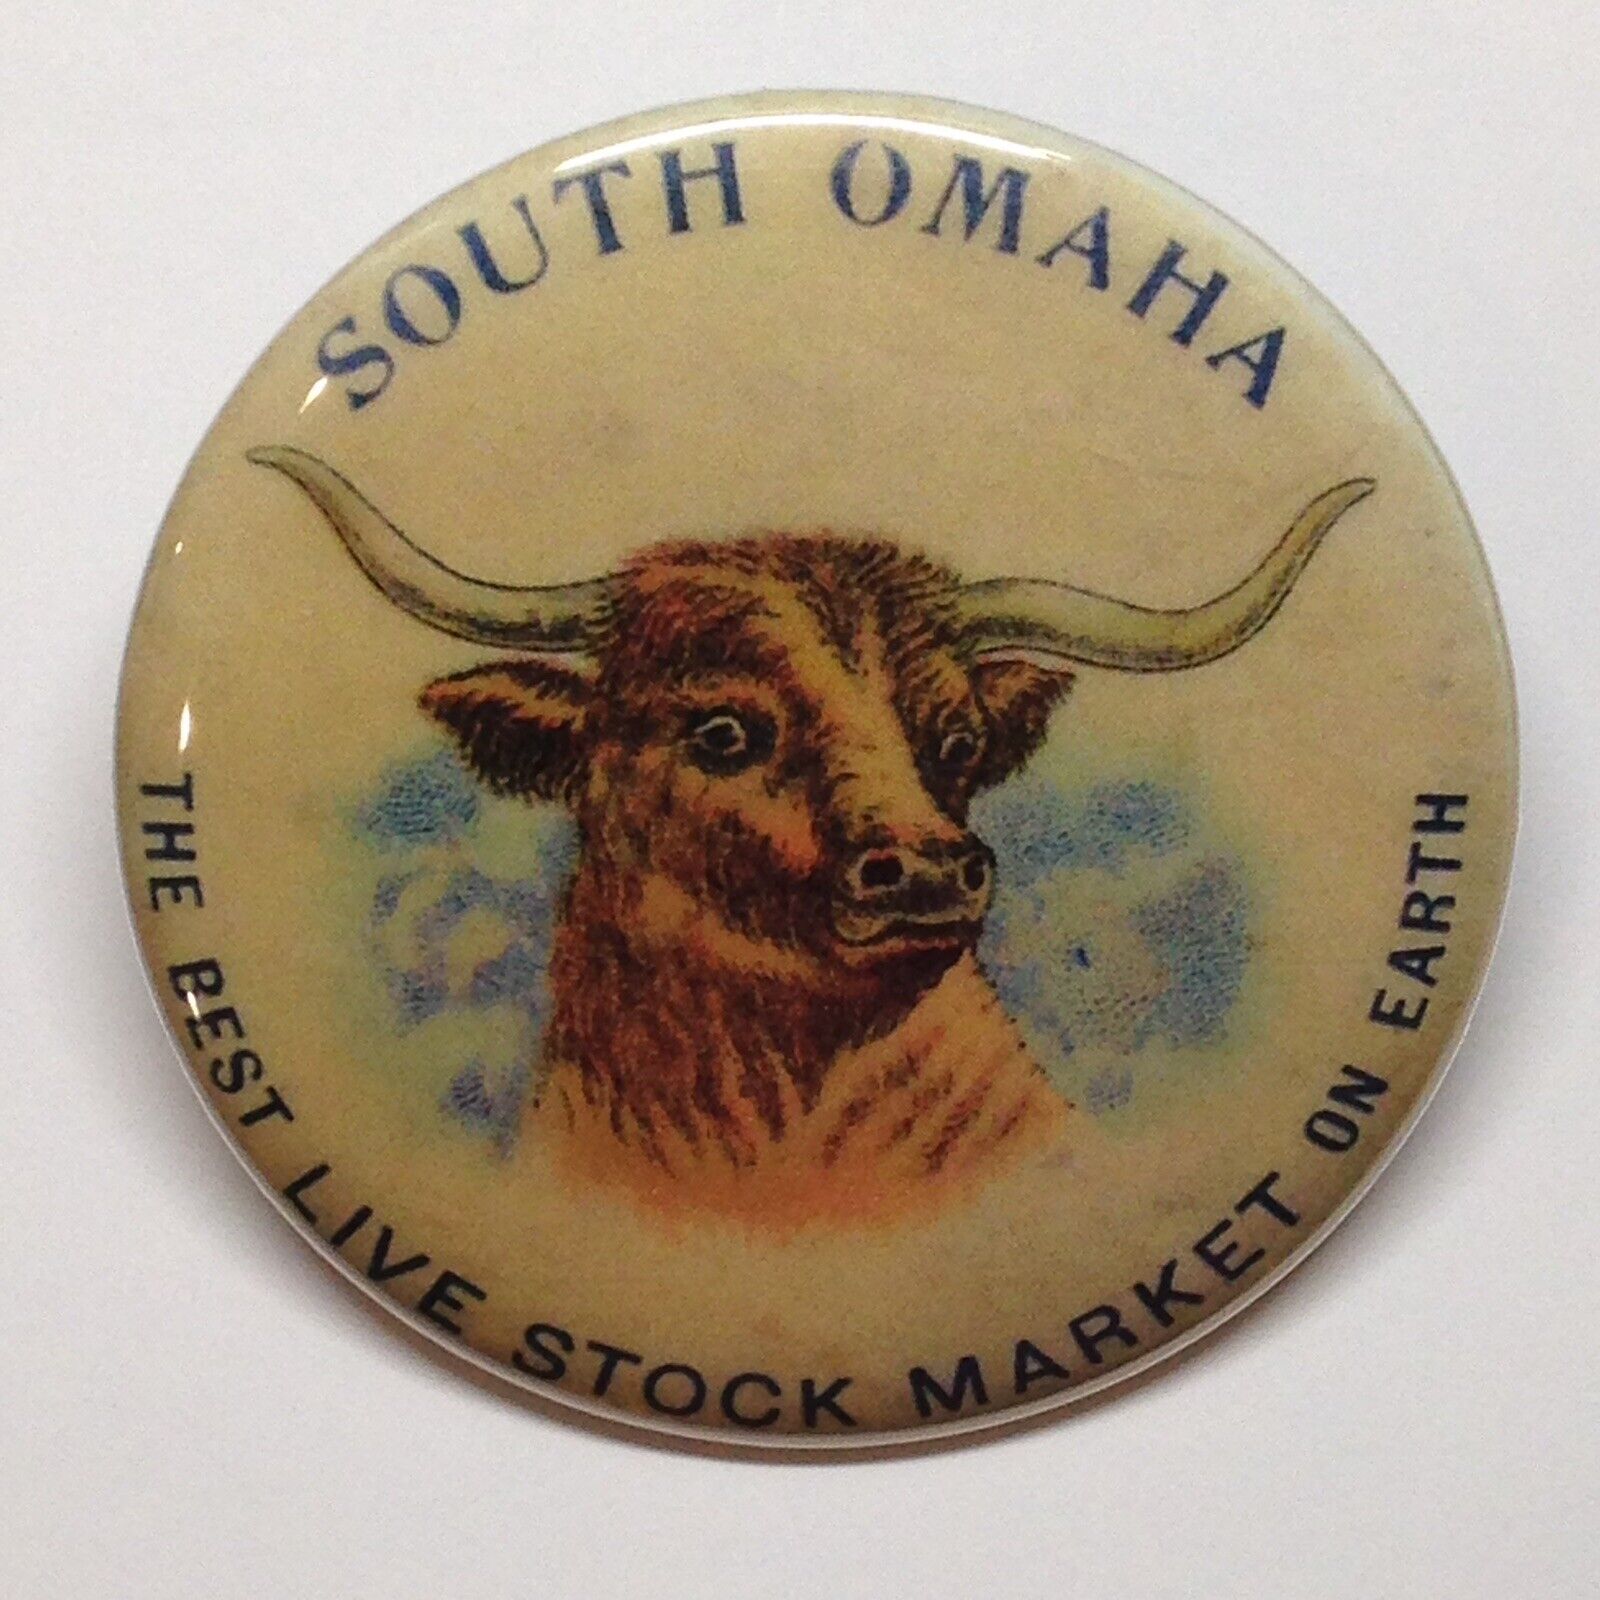 South Omaha Livestock Market Advertising Pocket Mirror Vintage Style